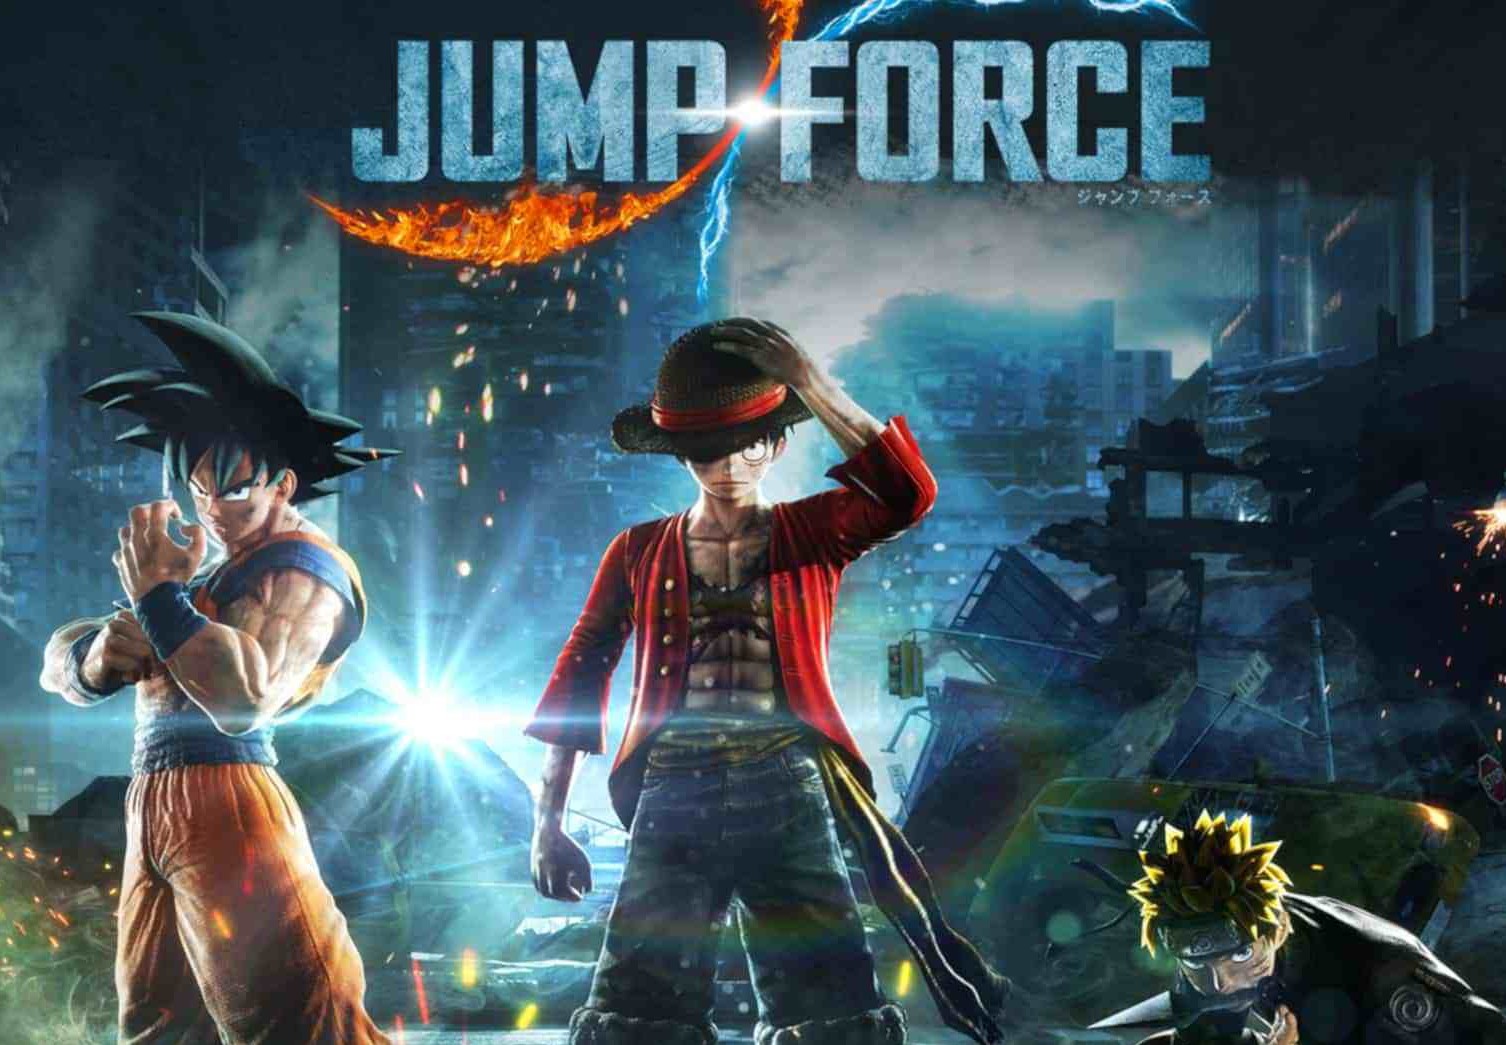 JUMP FORCE EU Steam CD Key